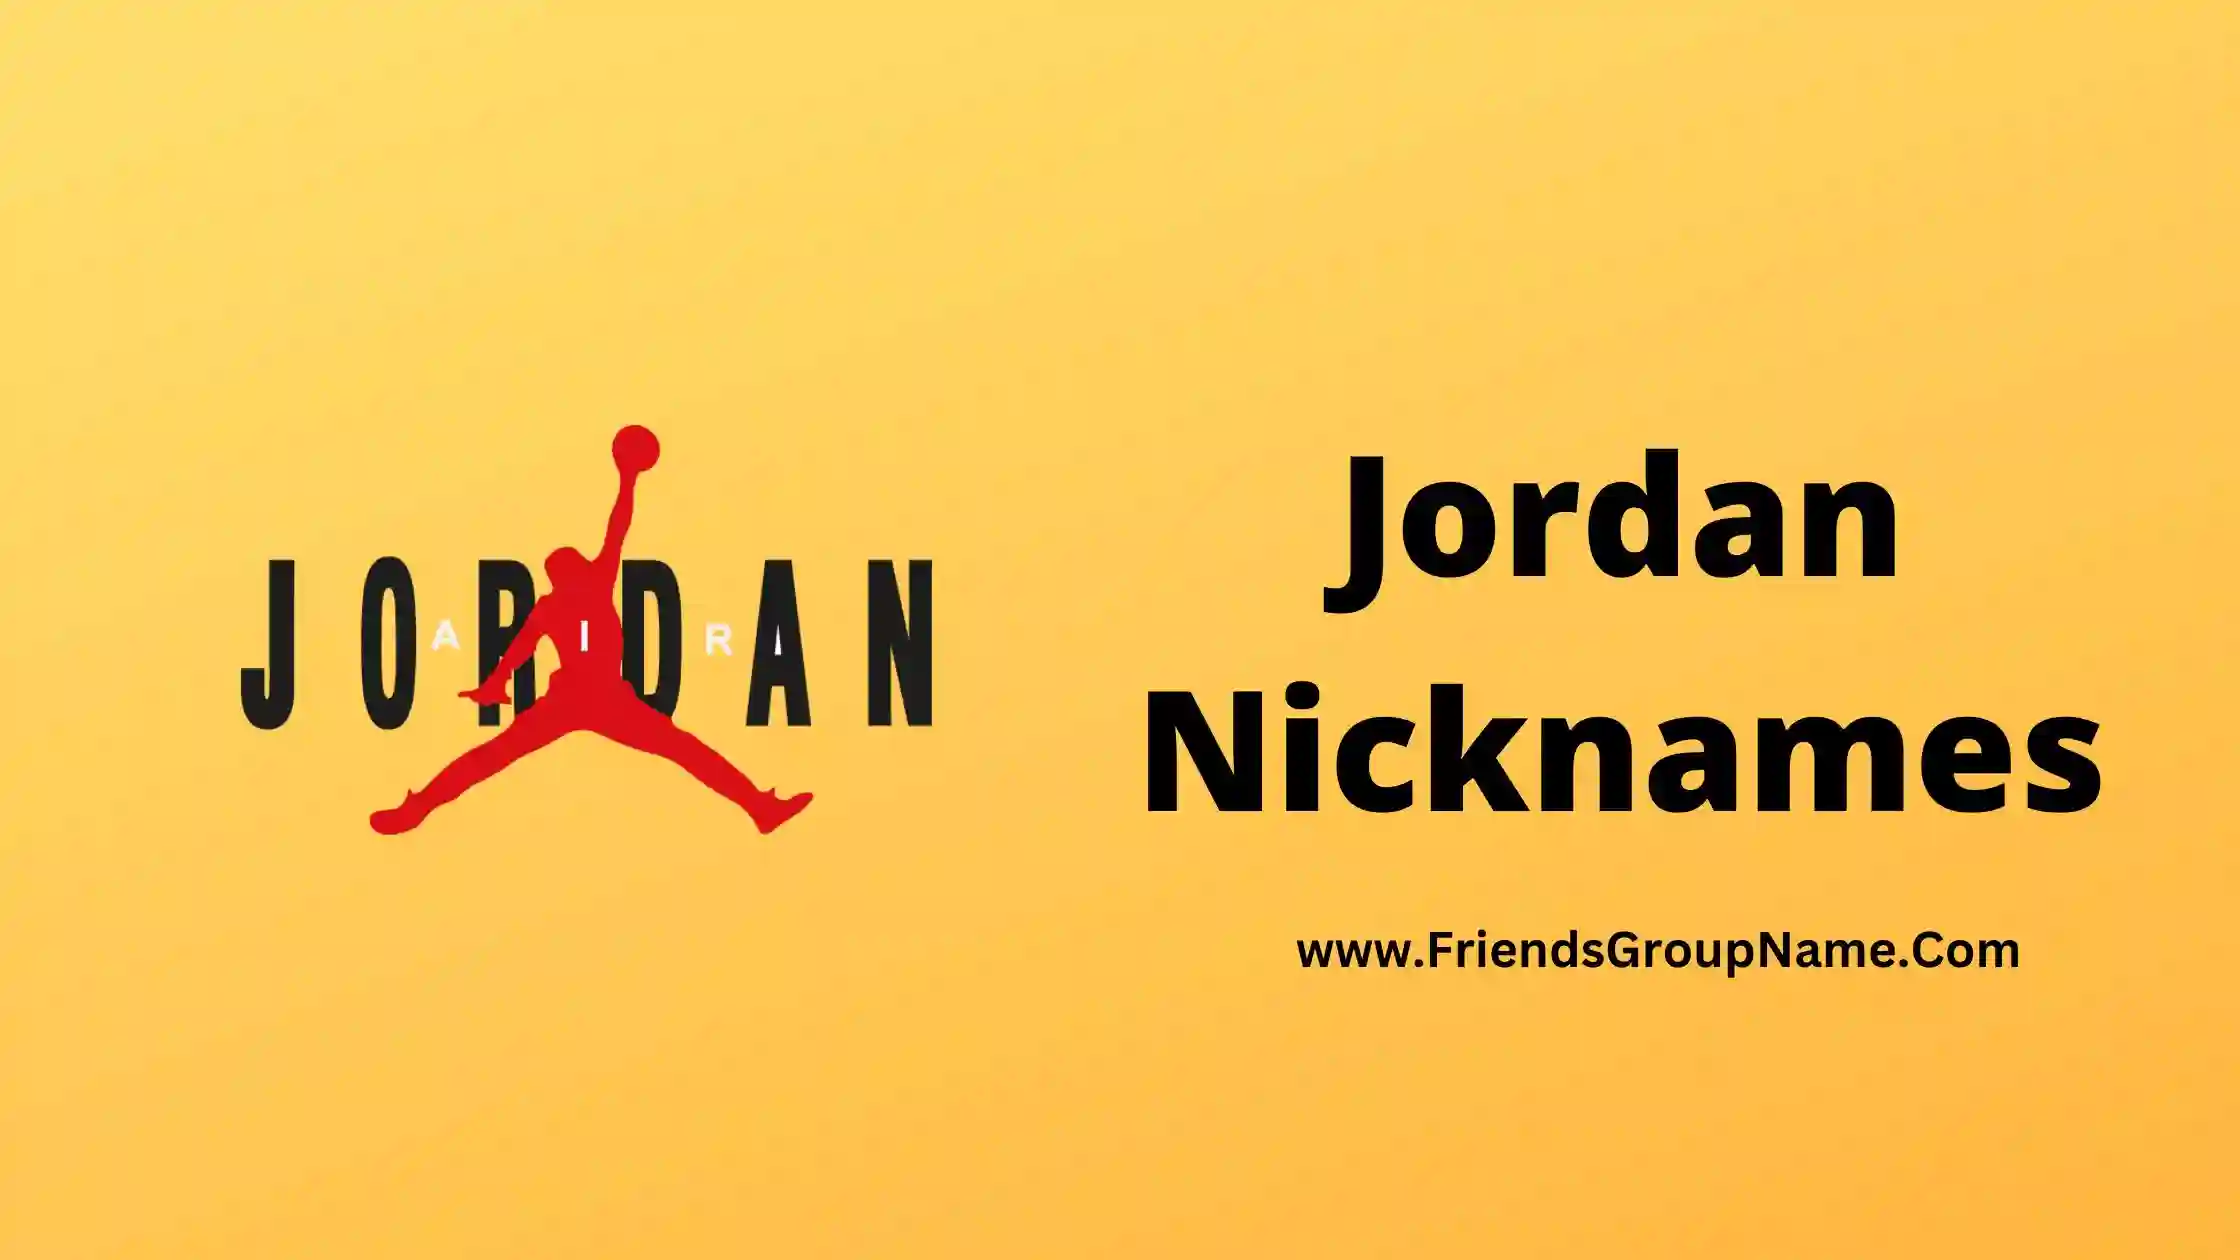 Jordan Nicknames